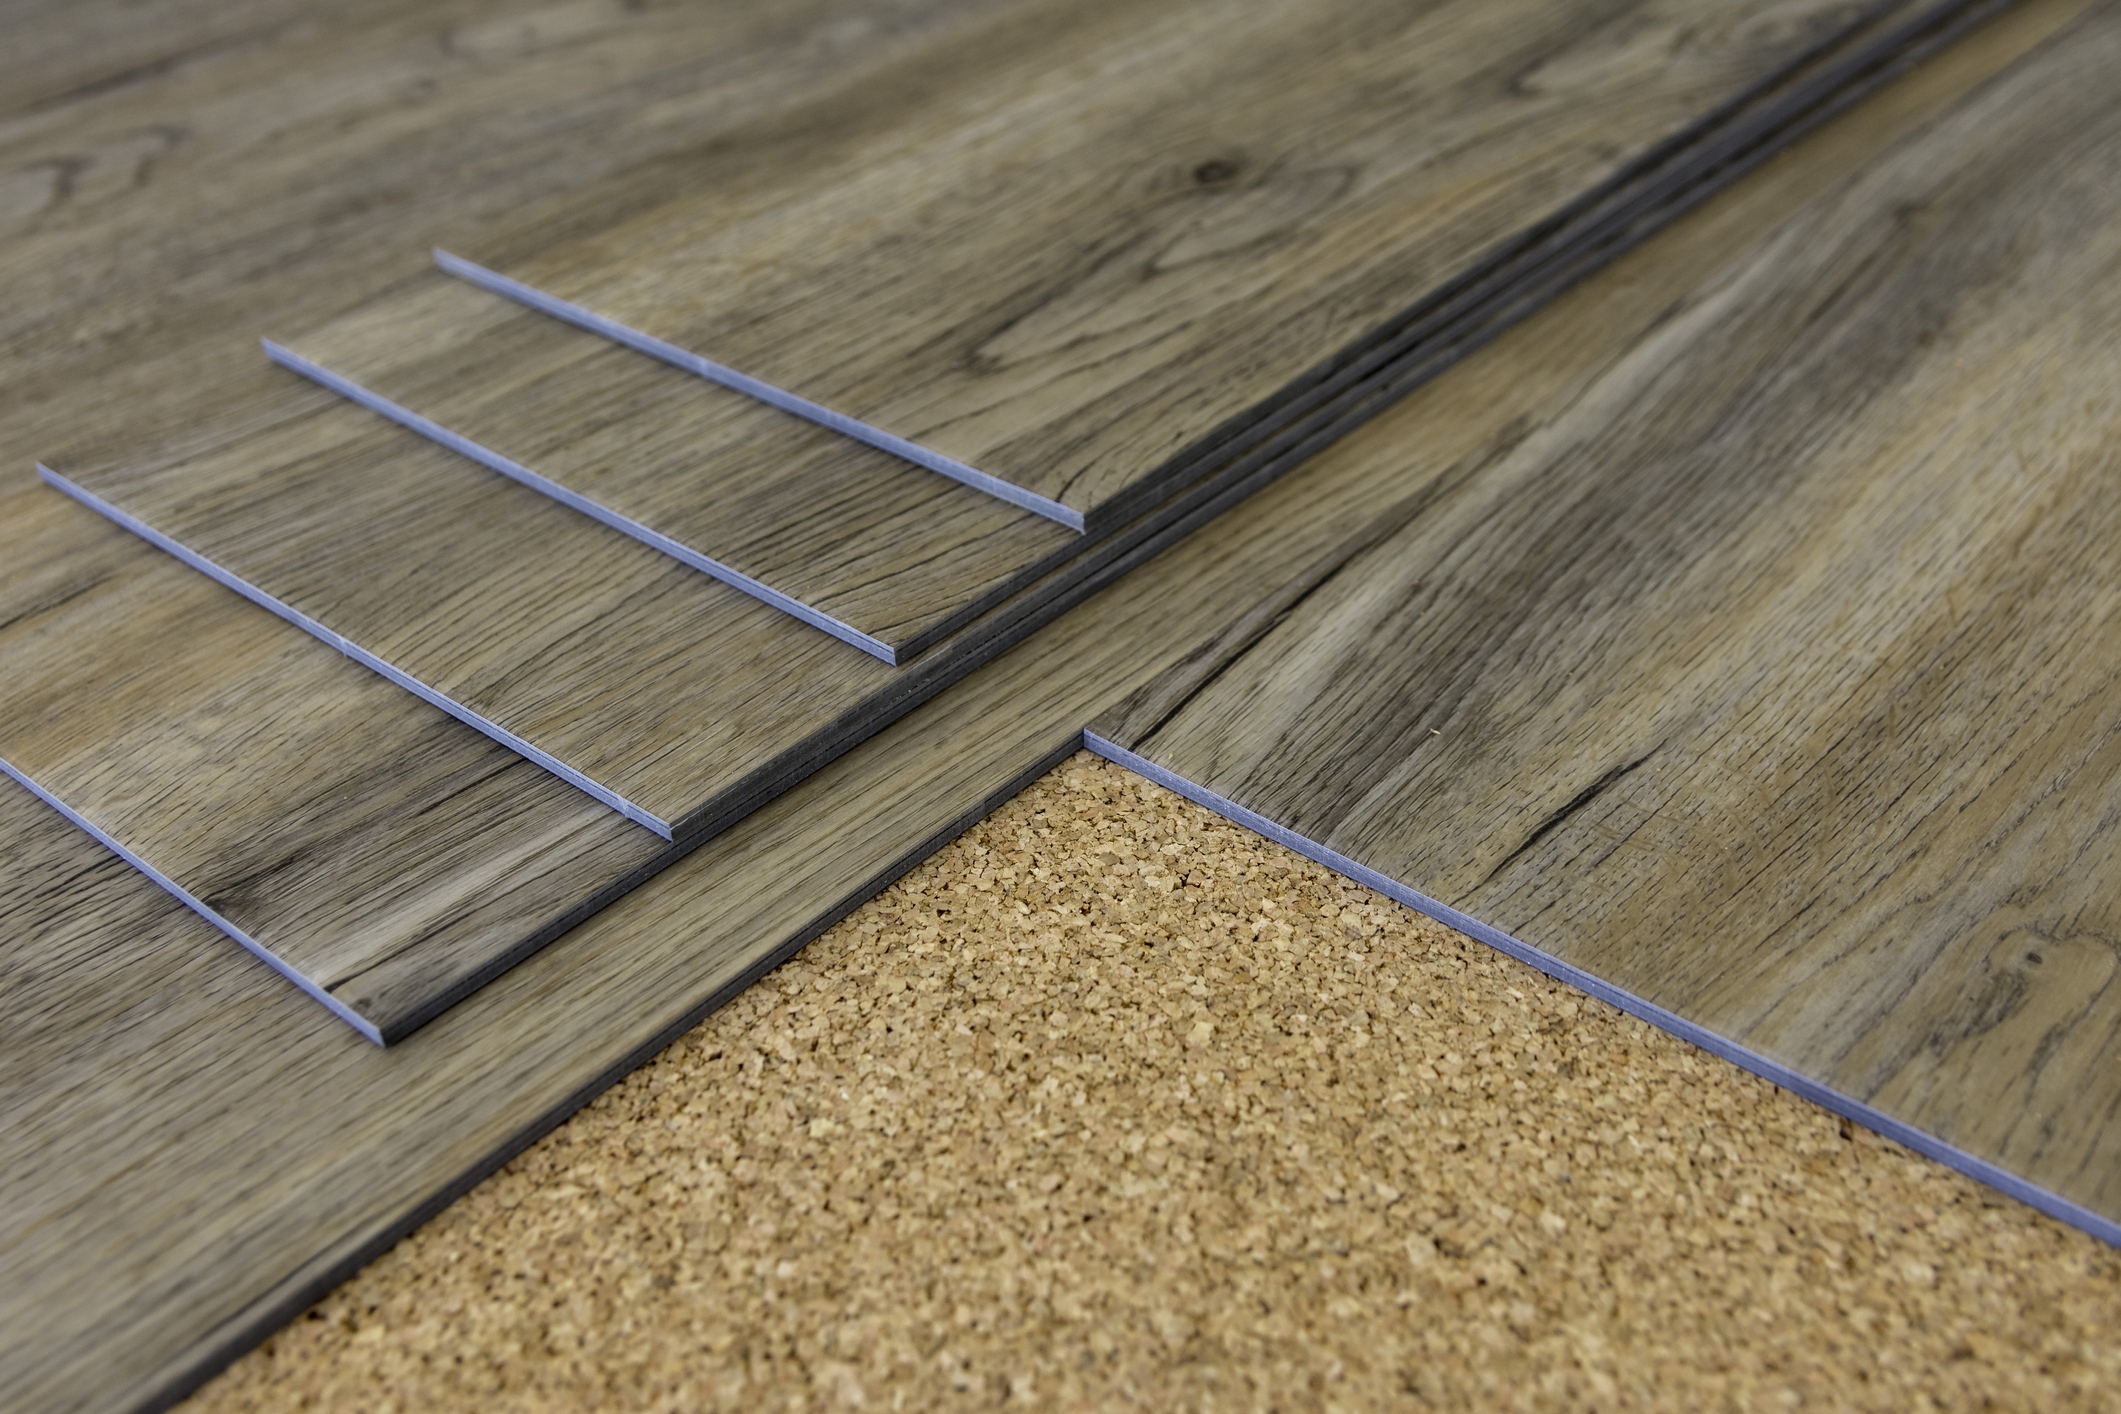 Vinyl plank flooring with light pine wood color, distressed oak graining, and pecan brown sideboards.